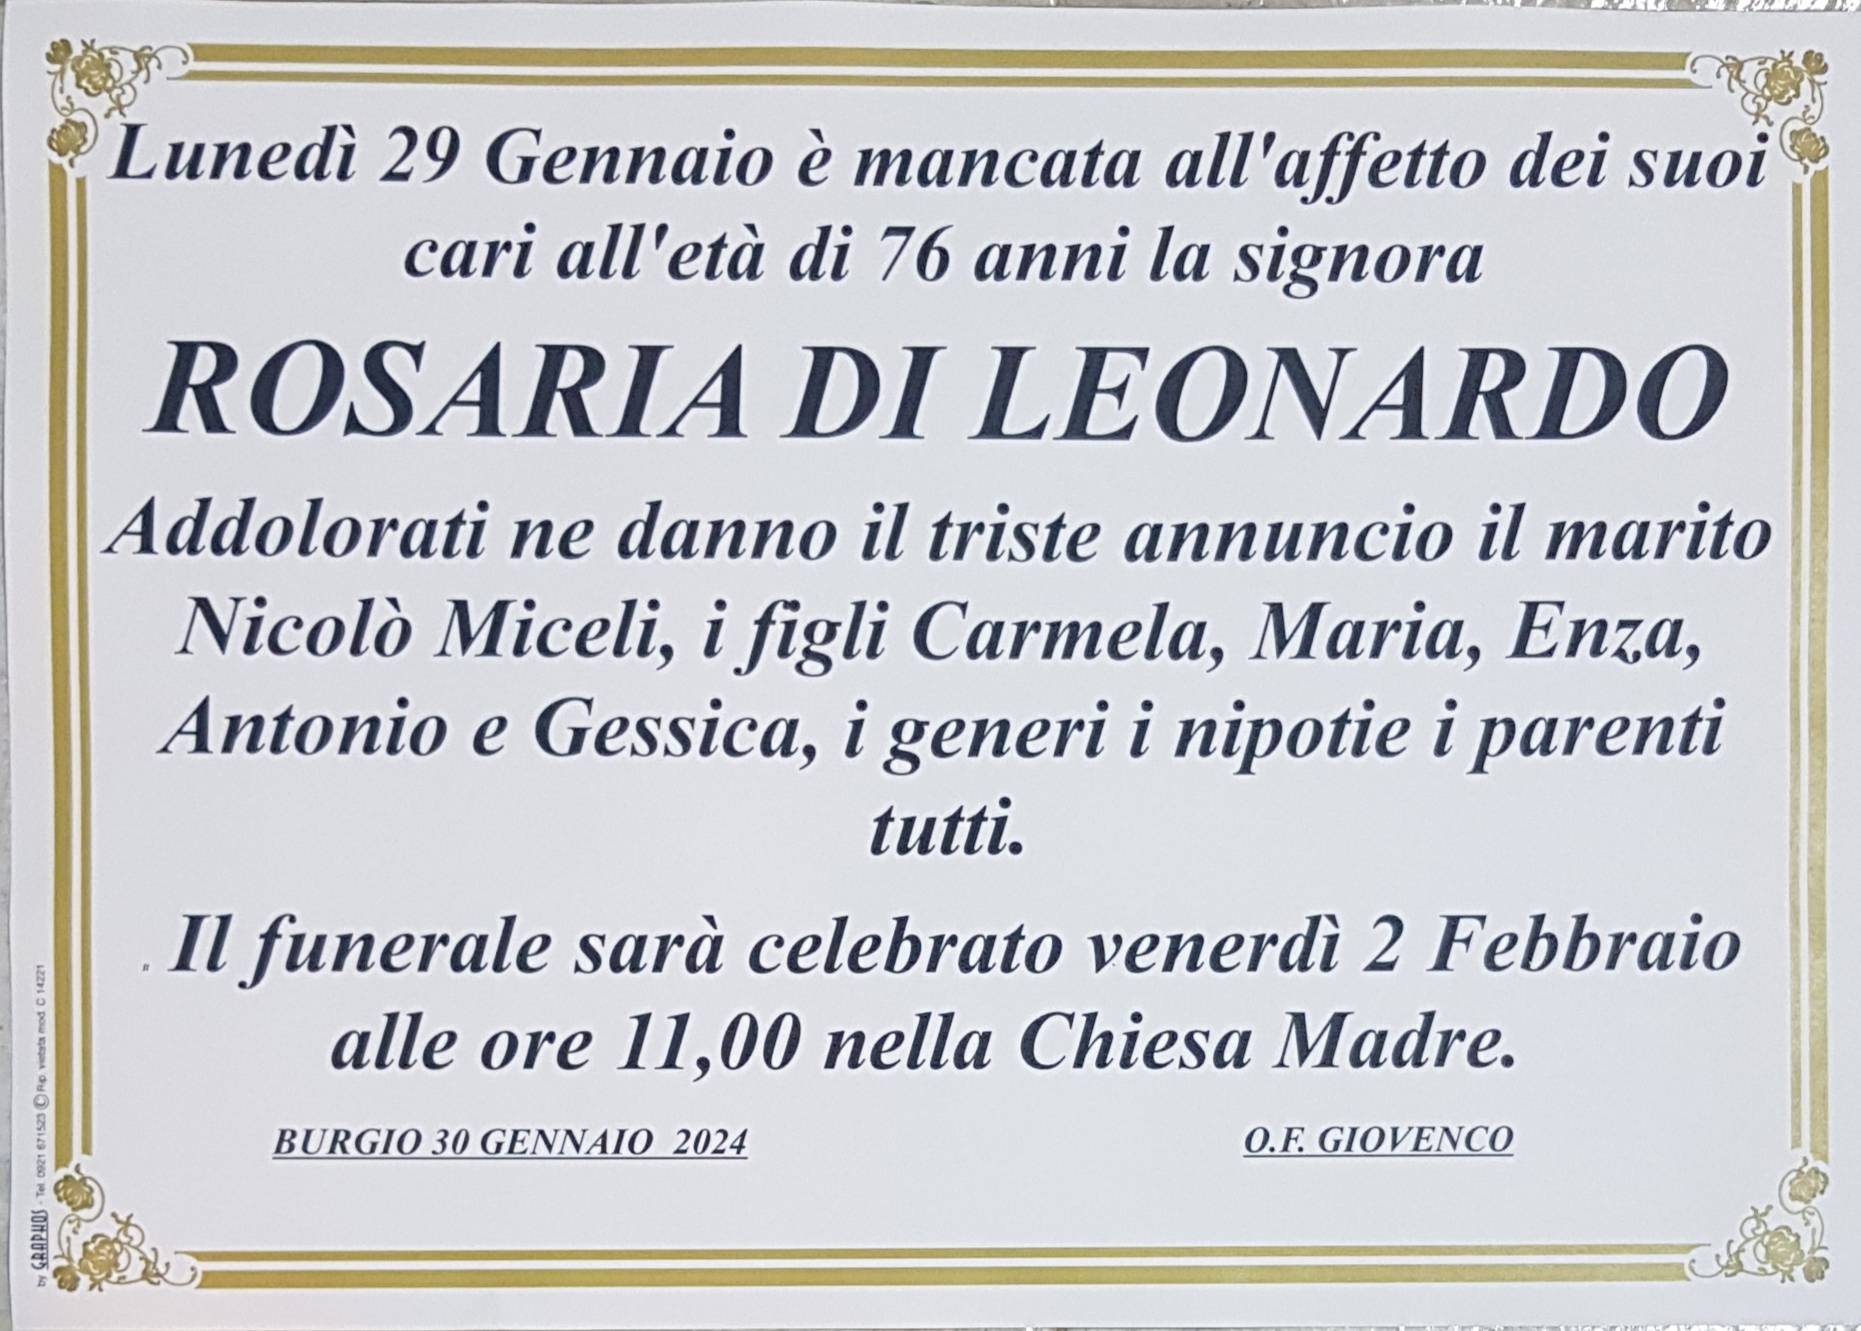 Rosaria Di Leonardo